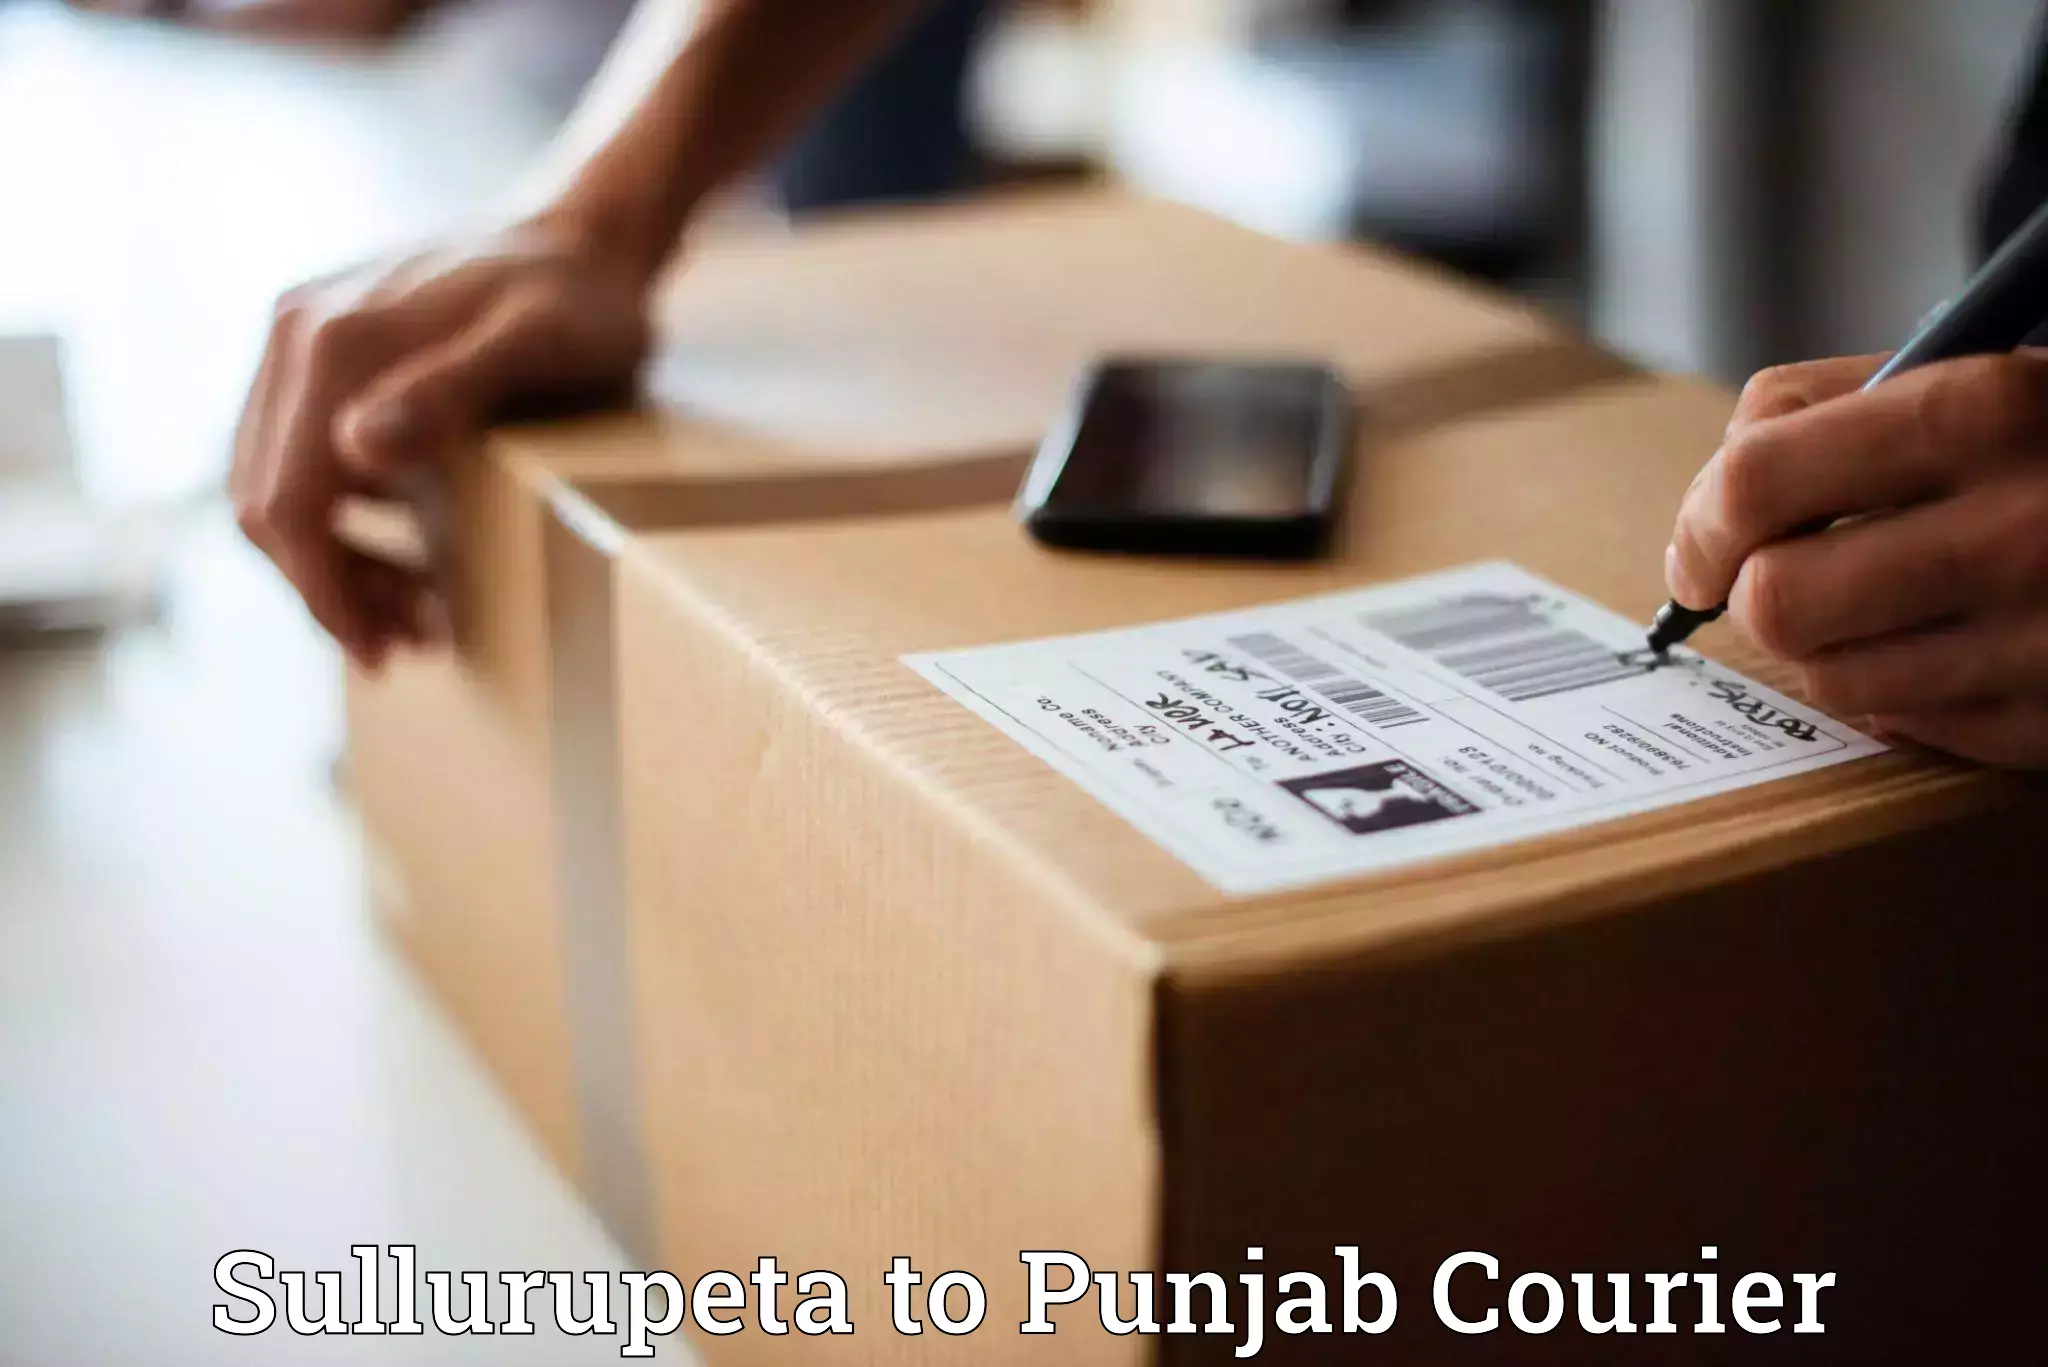 Secure shipping methods Sullurupeta to Jalandhar